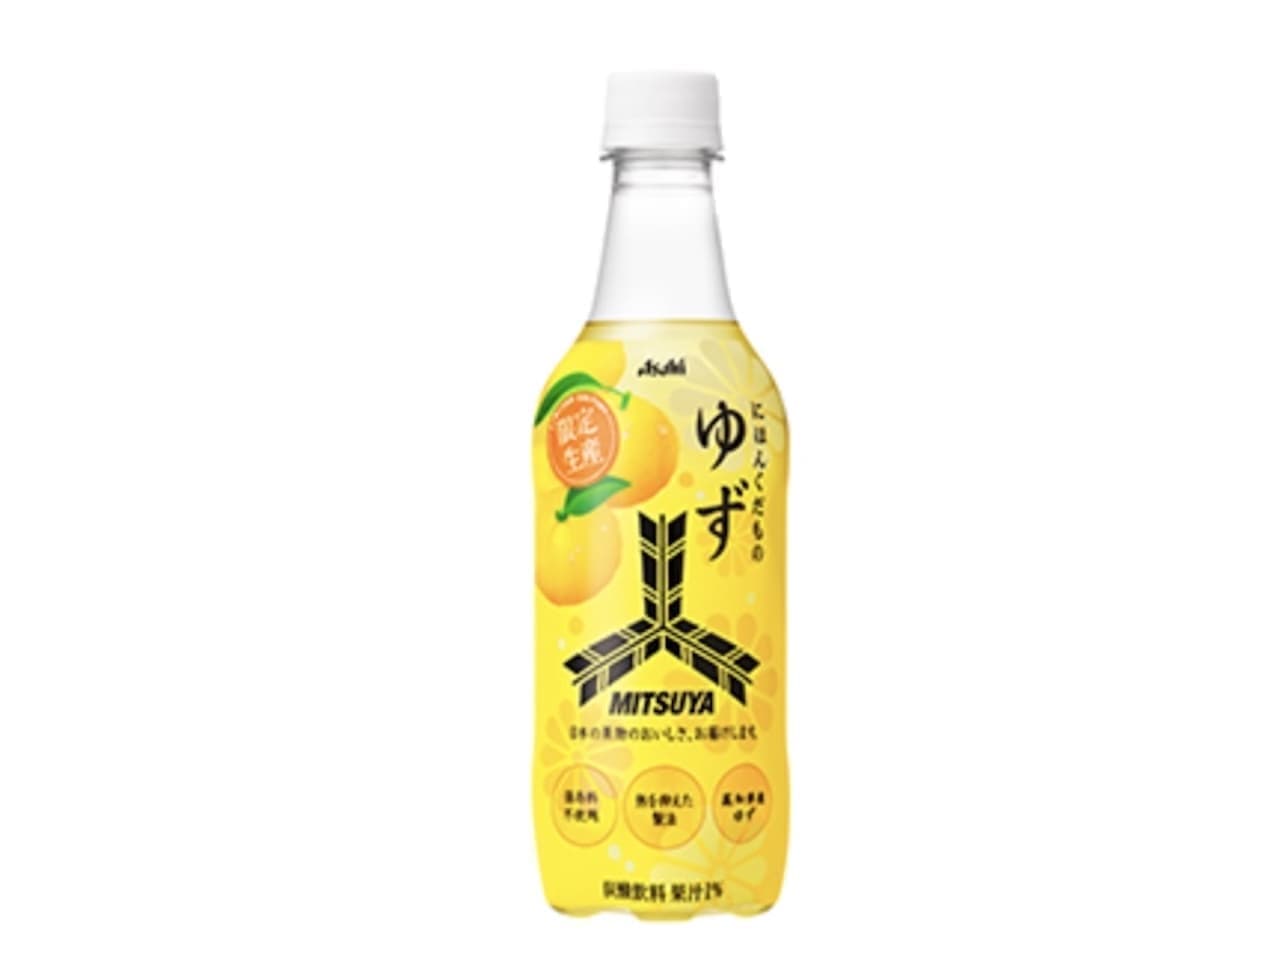 Asahi Soft Drinks "Mitsuya Nihonkumono Yuzu"